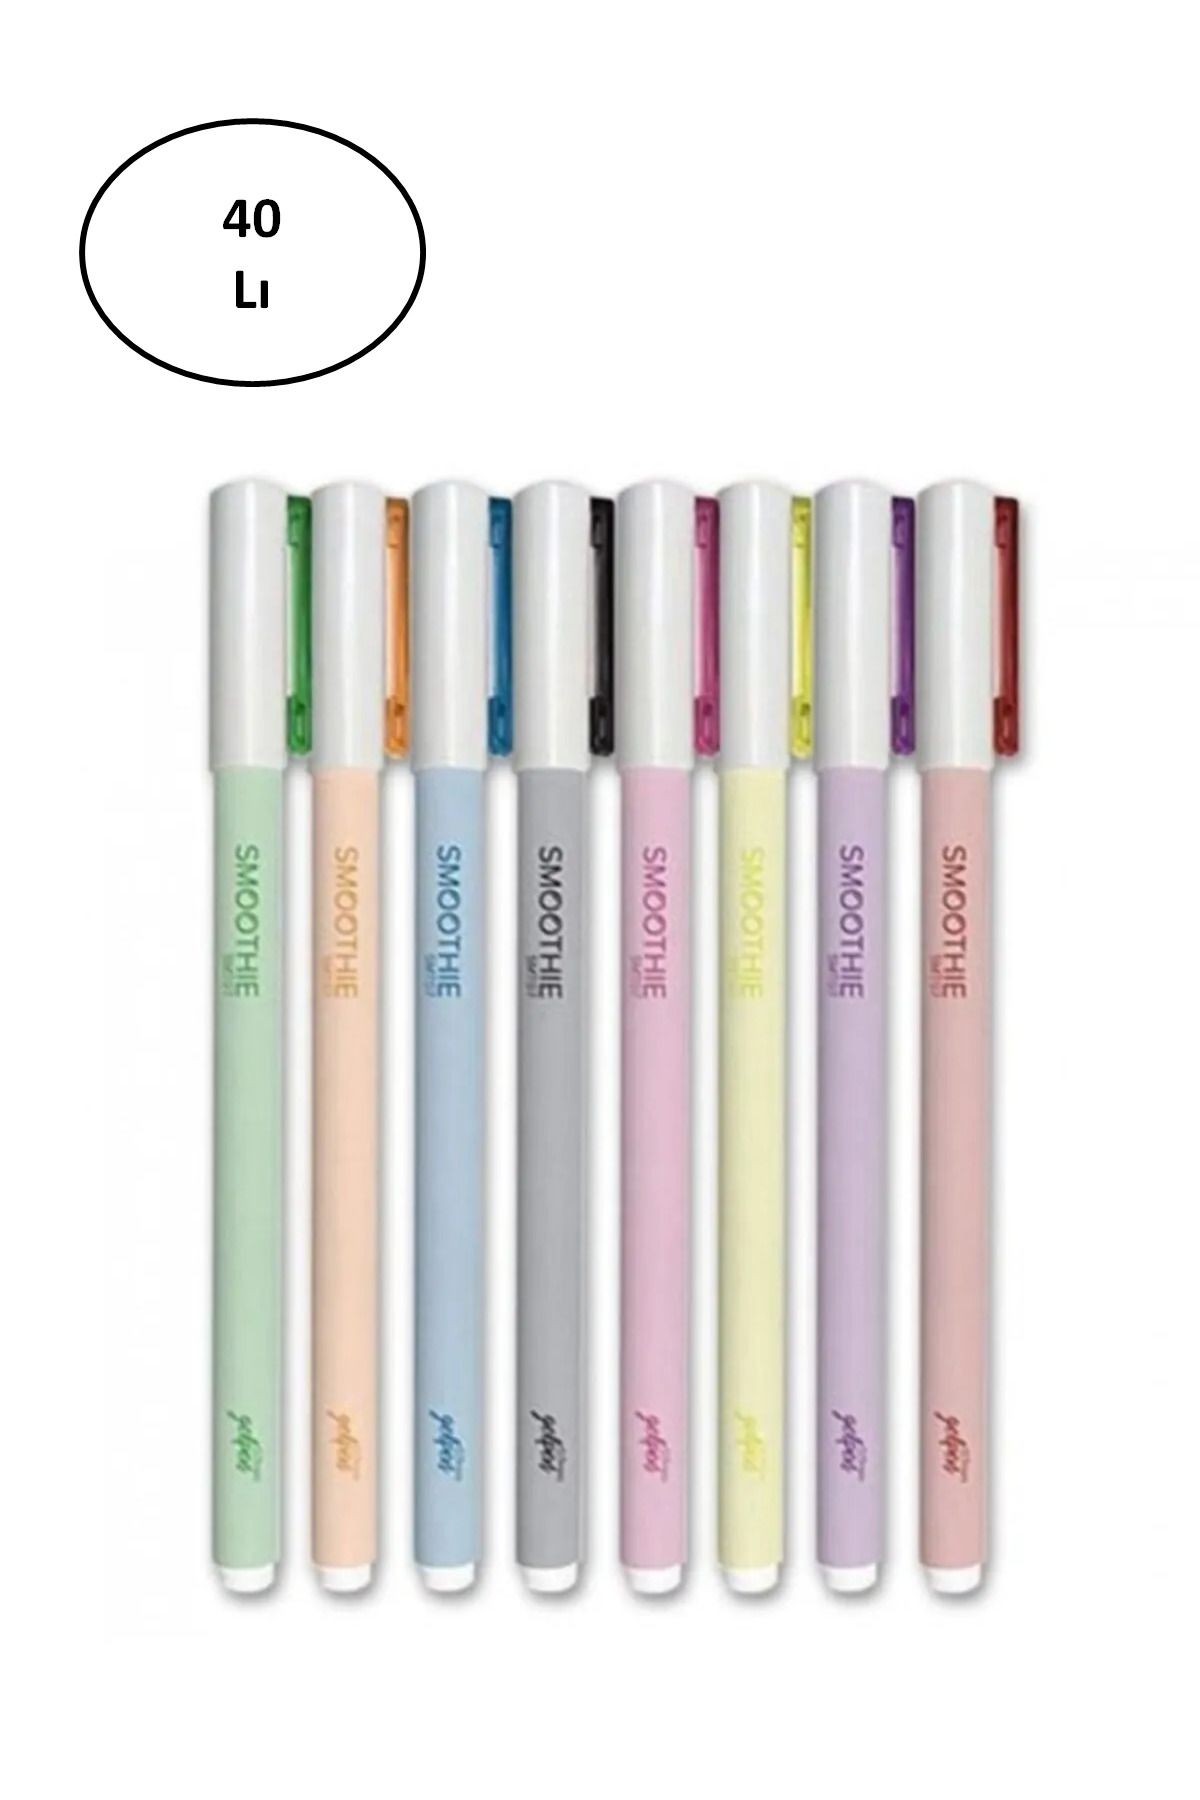 Genel Markalar Roller Kalem Smoothie Jel Karışık Renkler T00sbcc7sjp40a (40 LI KUTU)